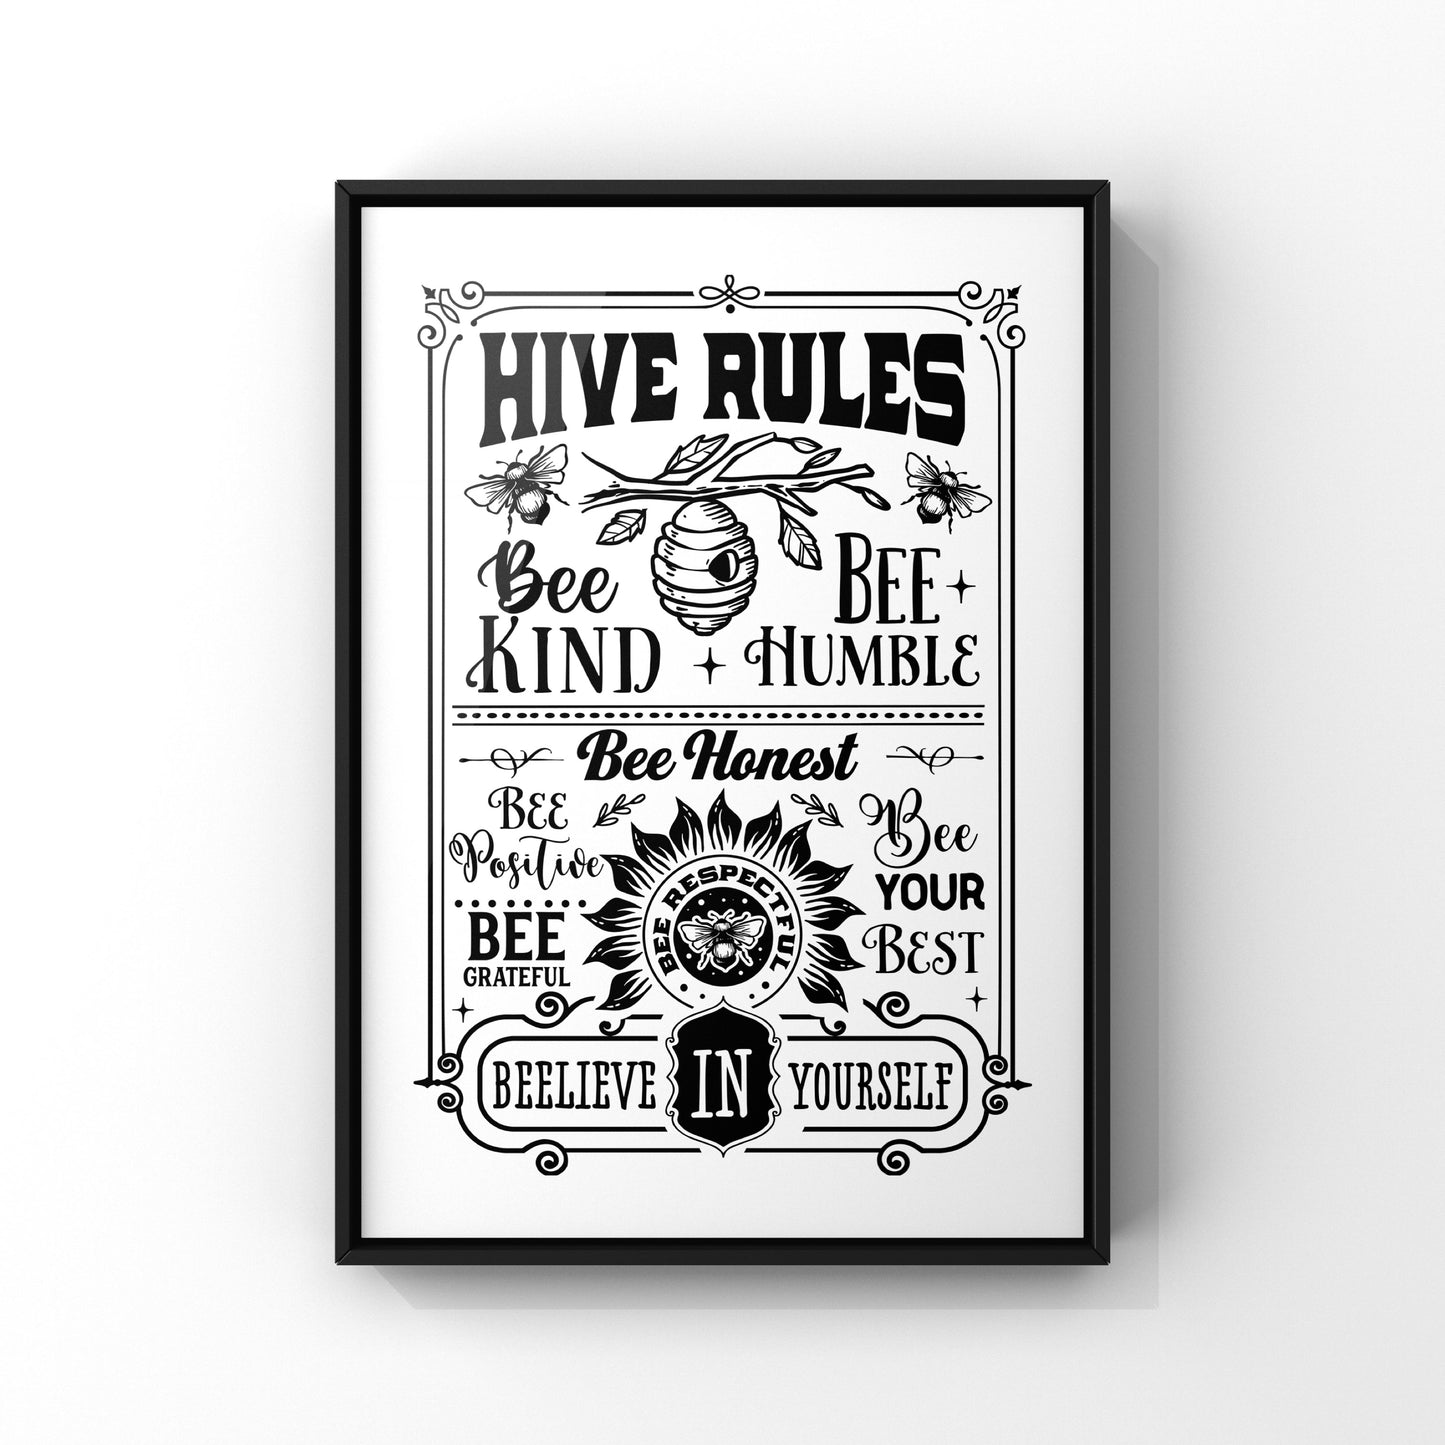 Hive rules